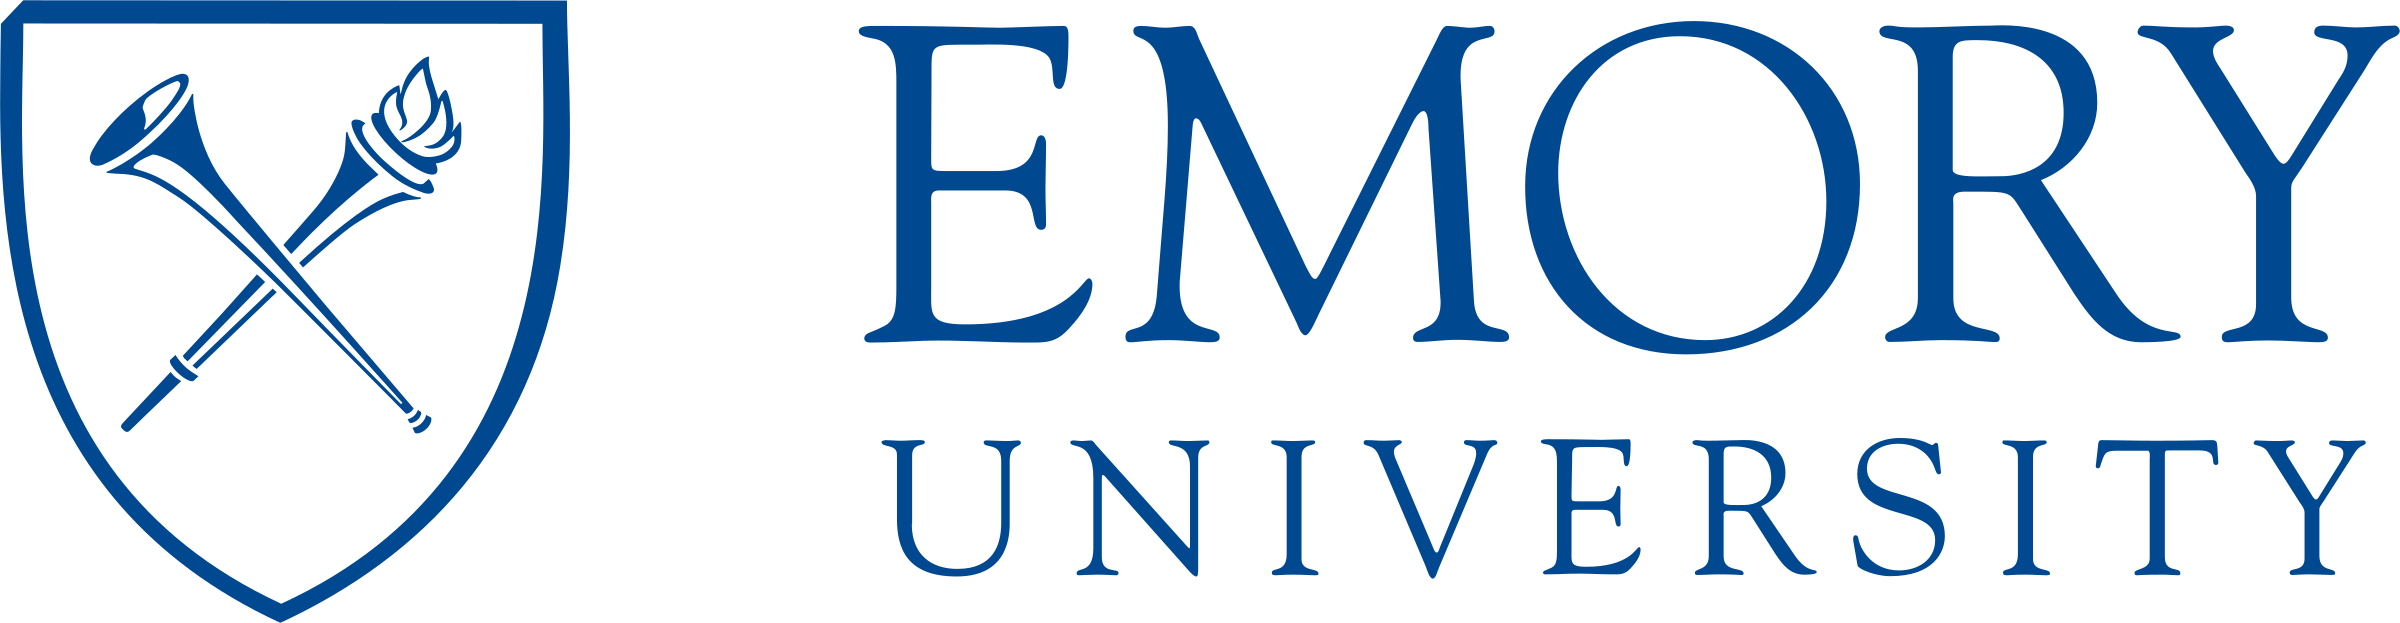 emory-university-logo-png-transparent.png